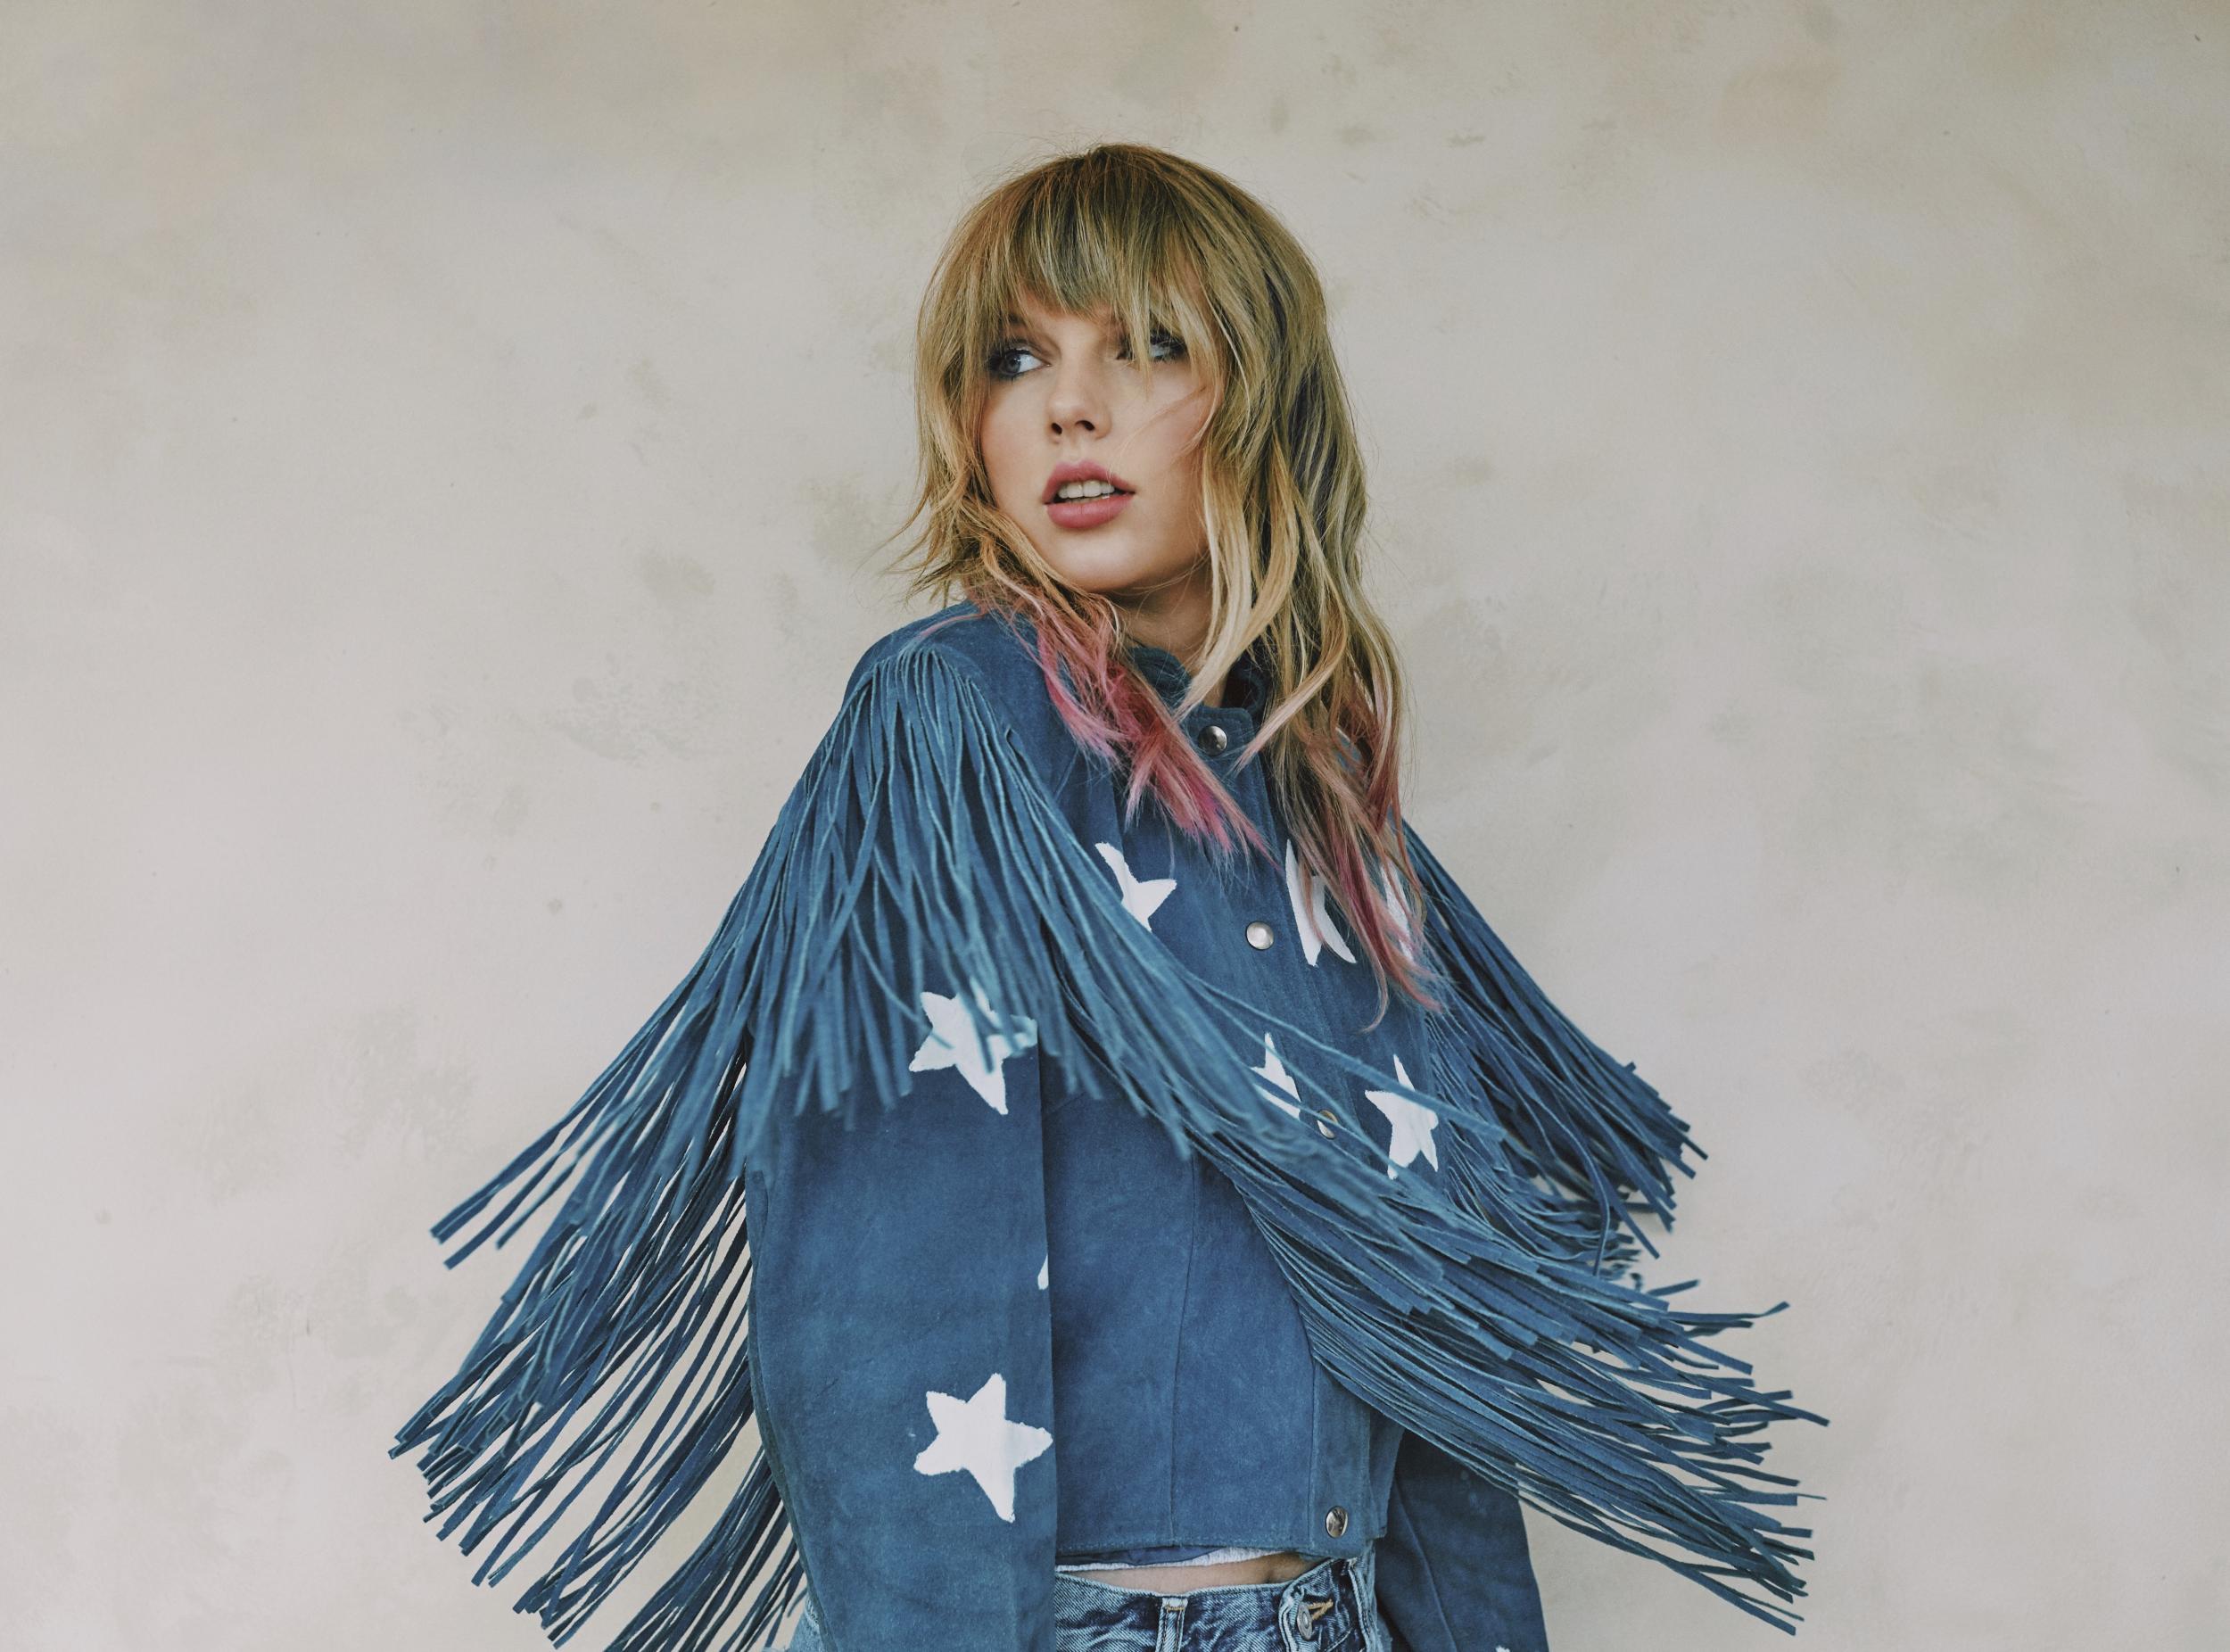 Taylor Swift's 100 album tracks